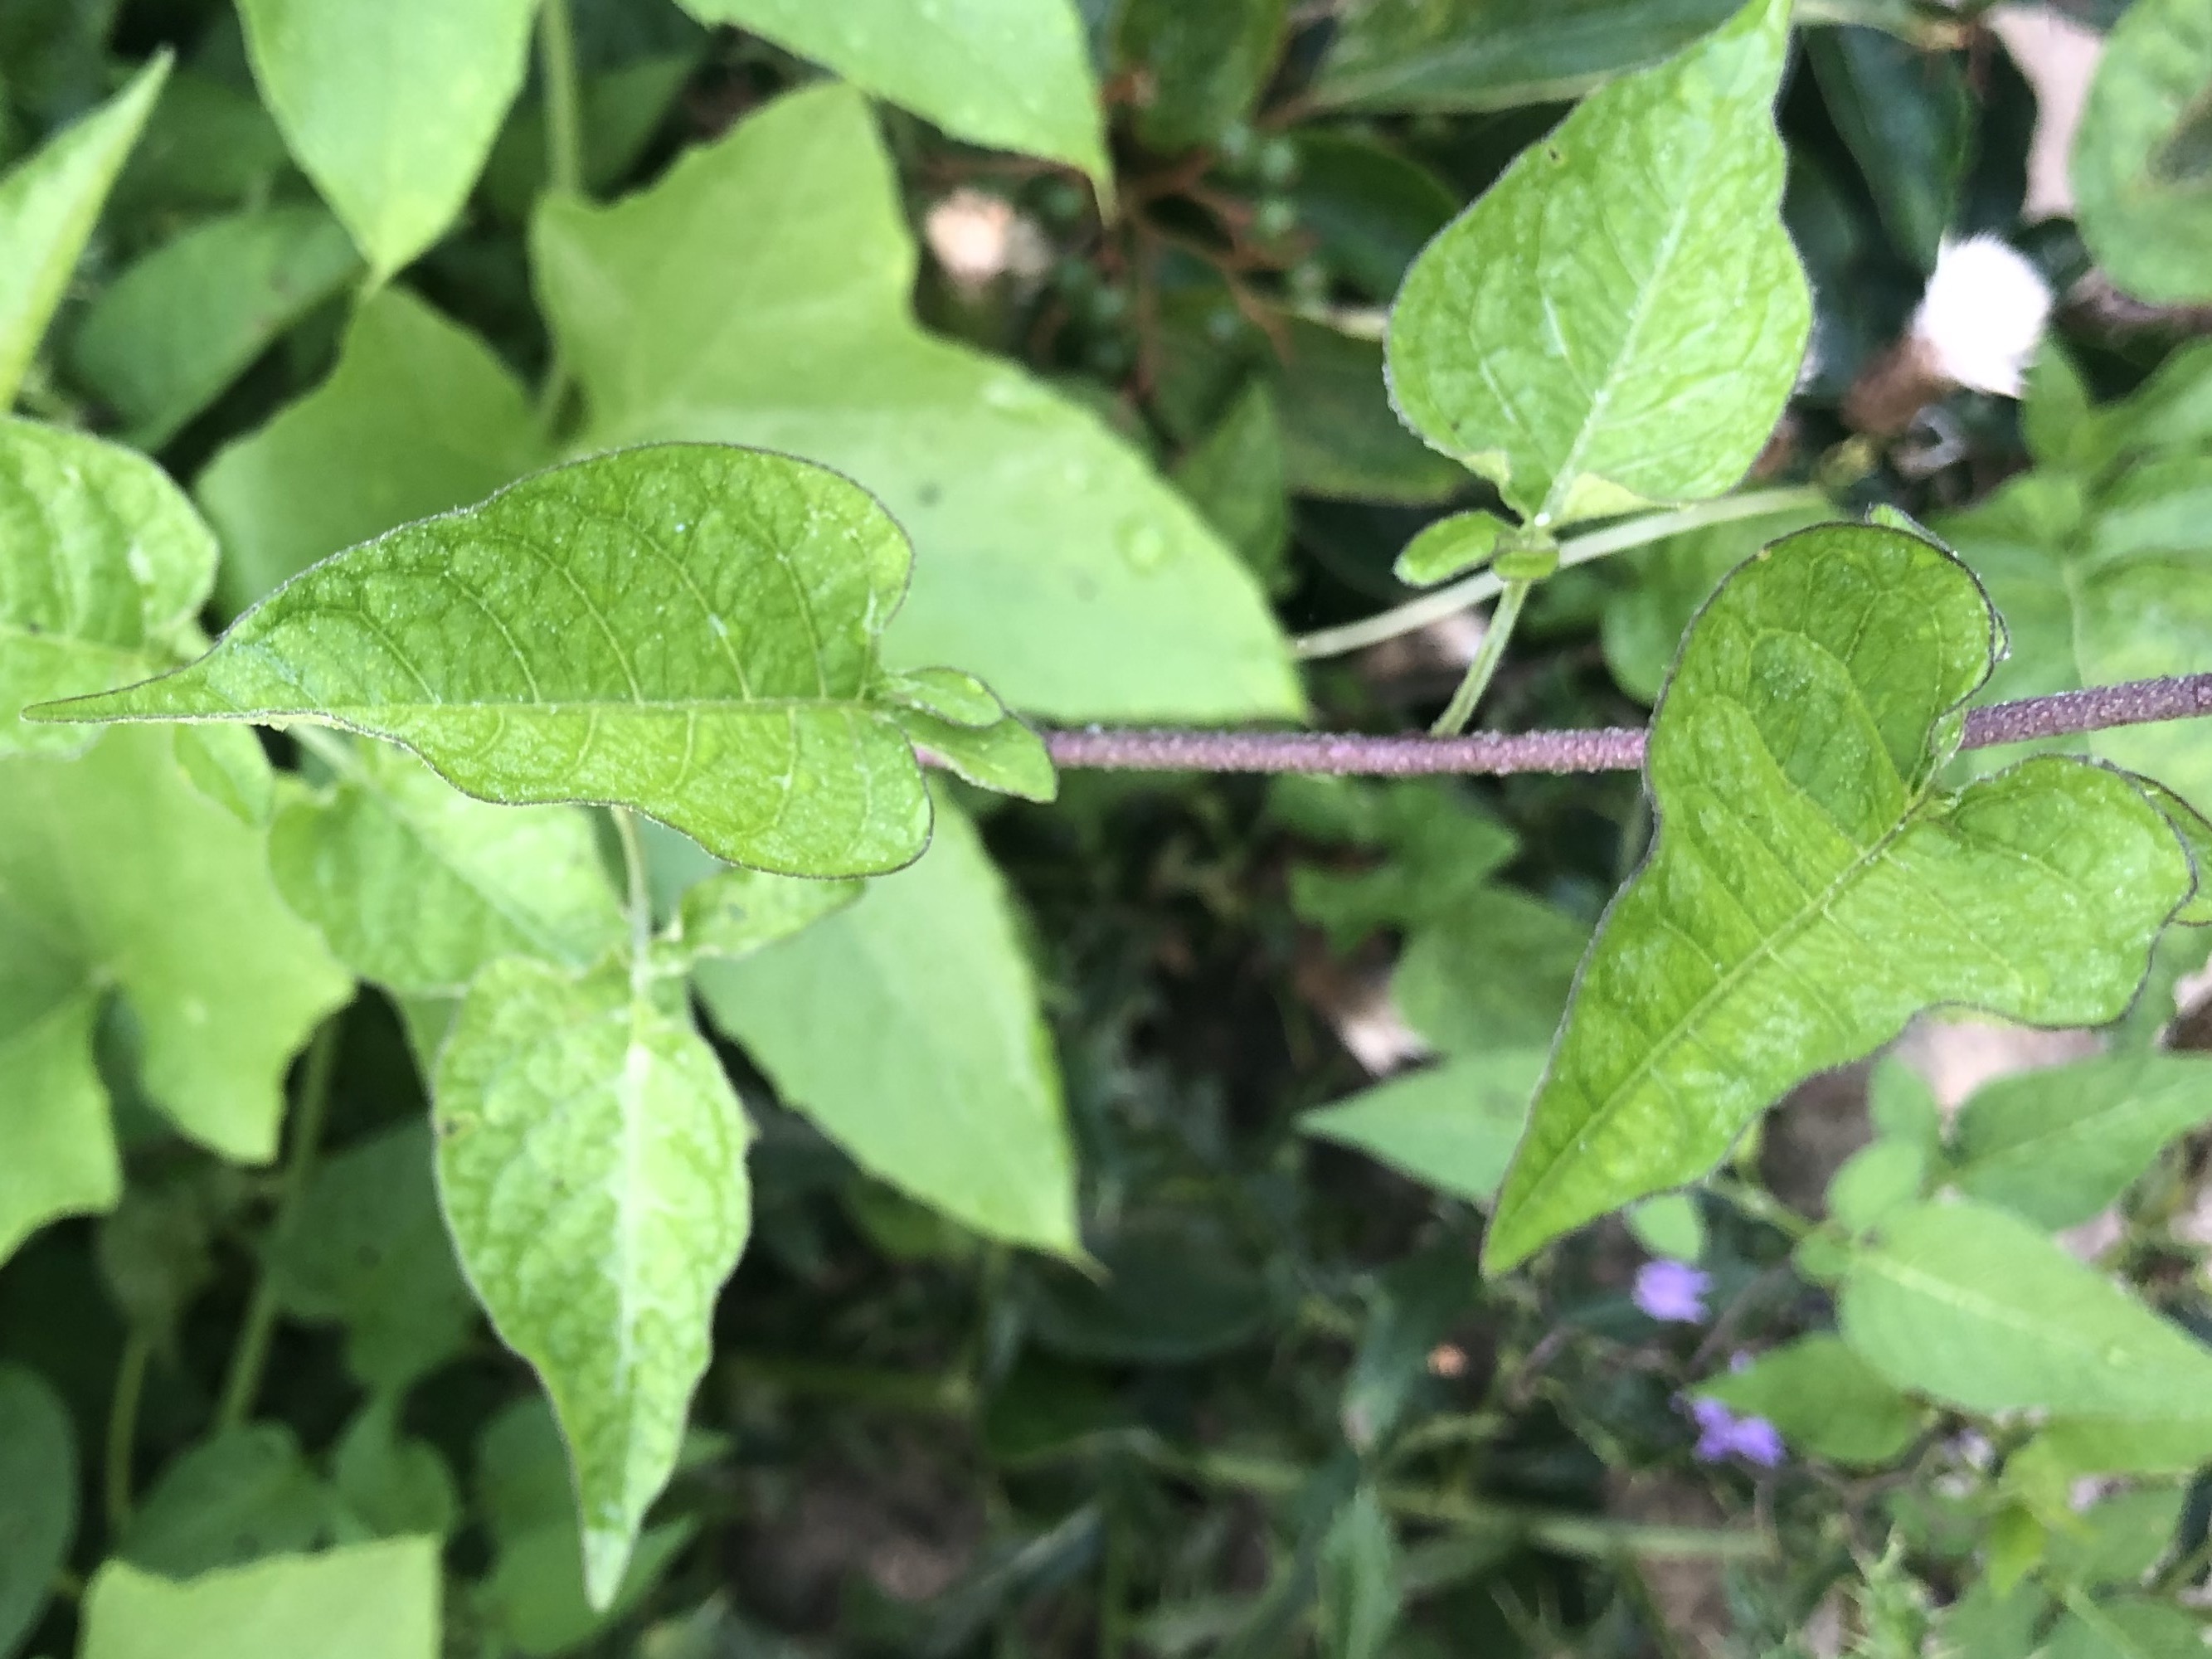 Bittersweet Nightshade leaves and vine stem near Duck Pondin Madison, Wisconsin on July 31, 2021.